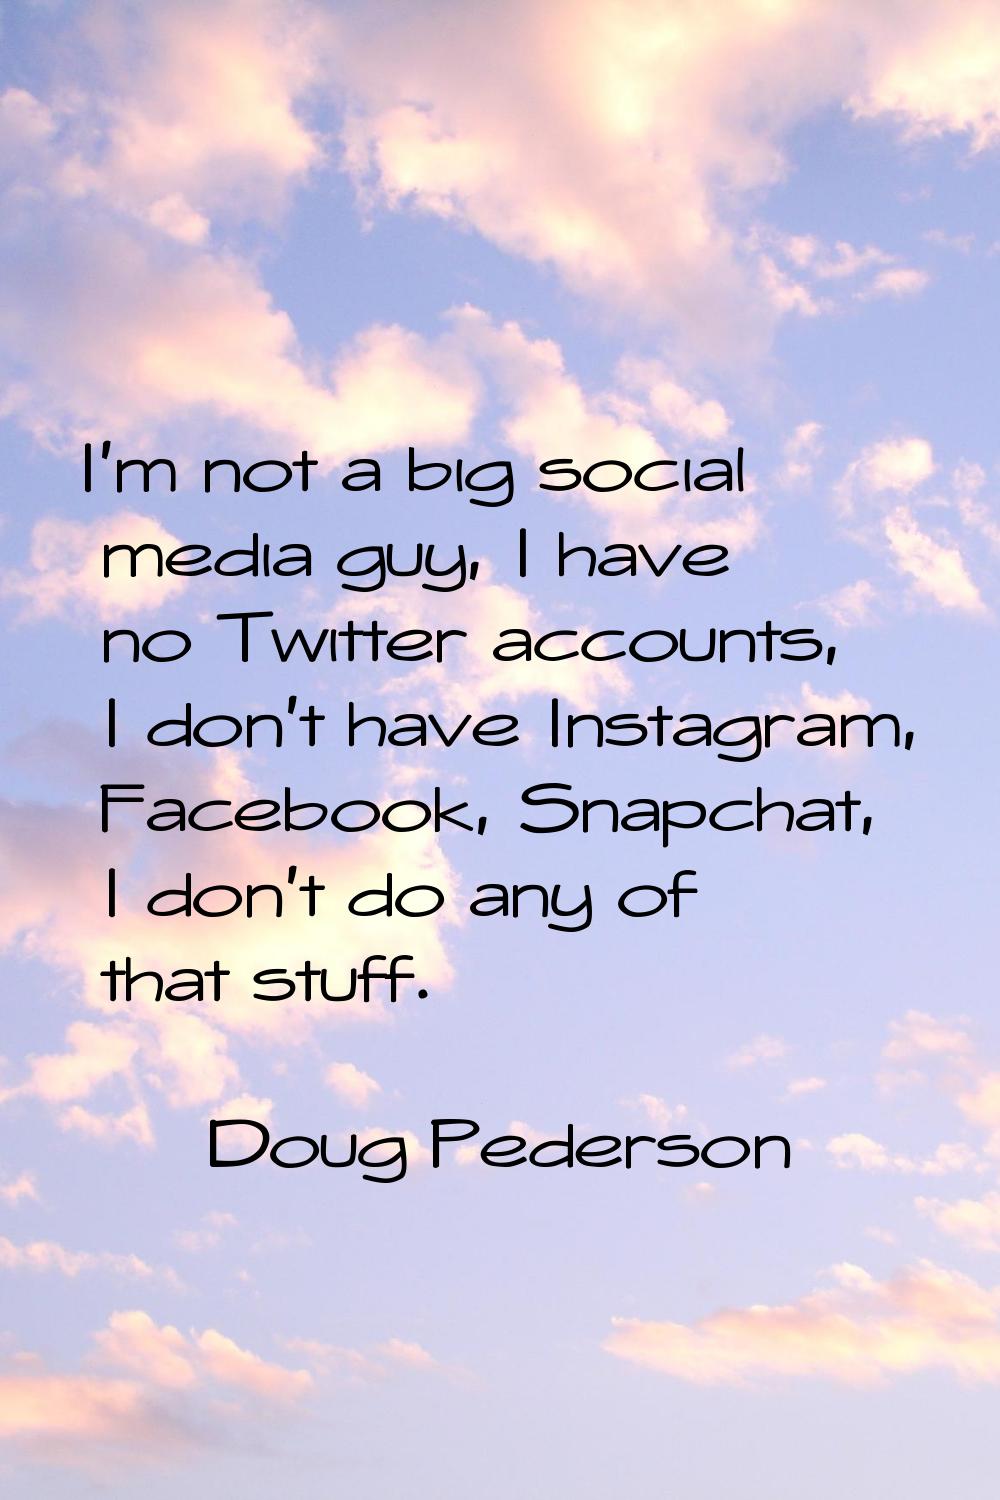 I'm not a big social media guy, I have no Twitter accounts, I don't have Instagram, Facebook, Snapc